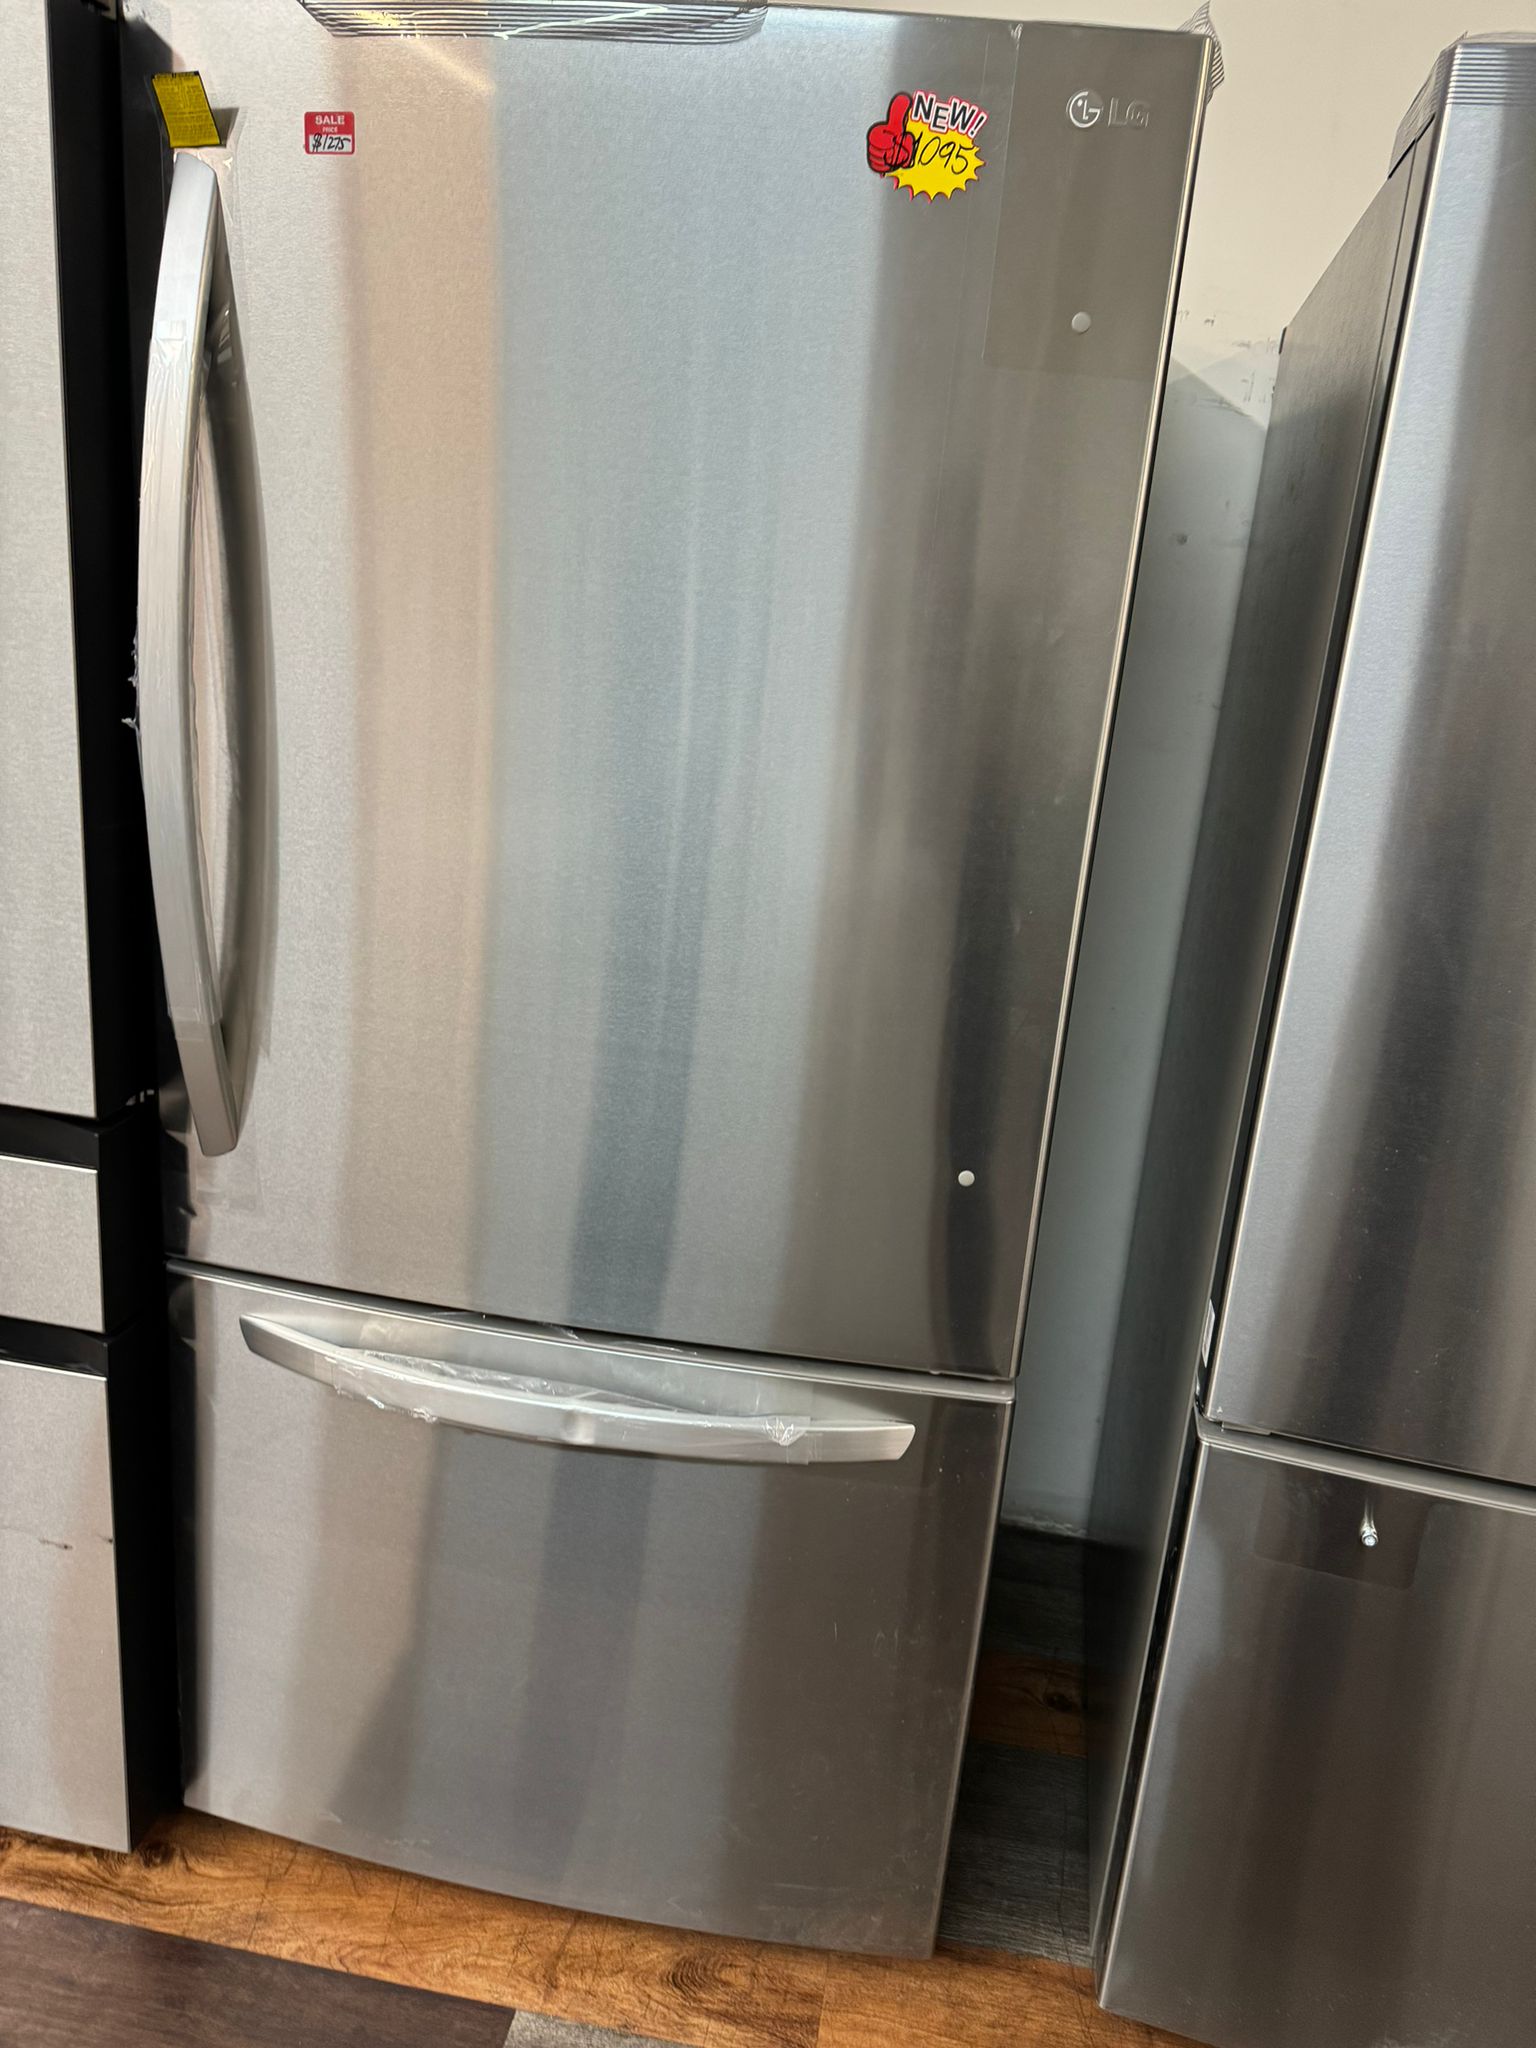 LG New – 25.5 Cu. Ft. Bottom-Freezer Refrigerator – Stainless Steel